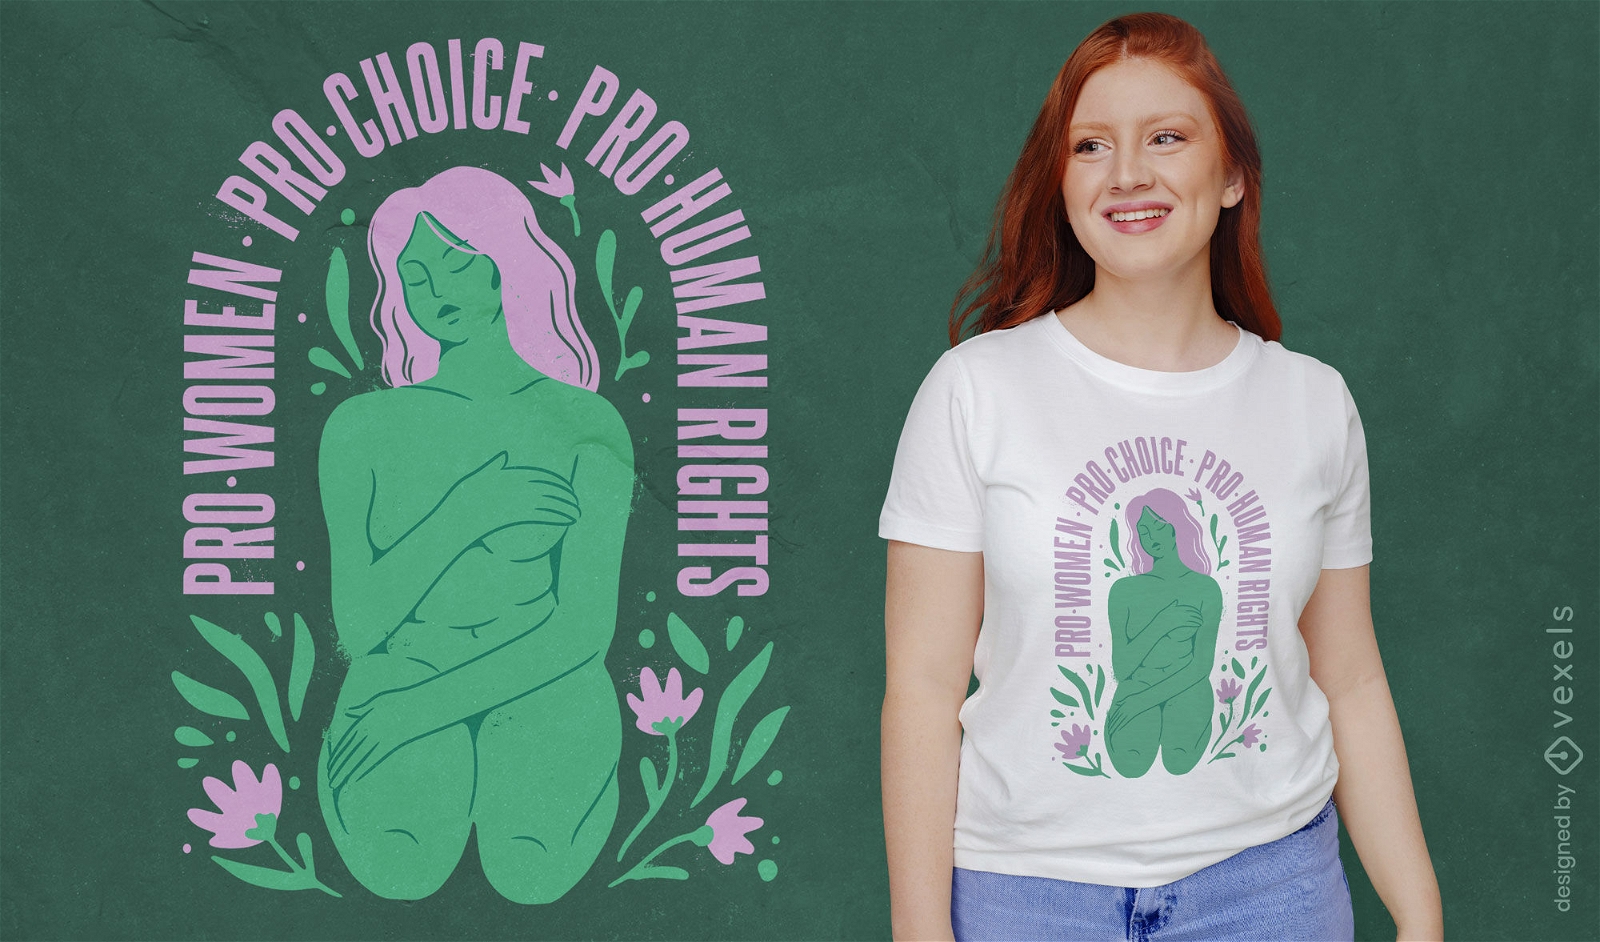 Dise?o de camiseta feminista Pro Choice.